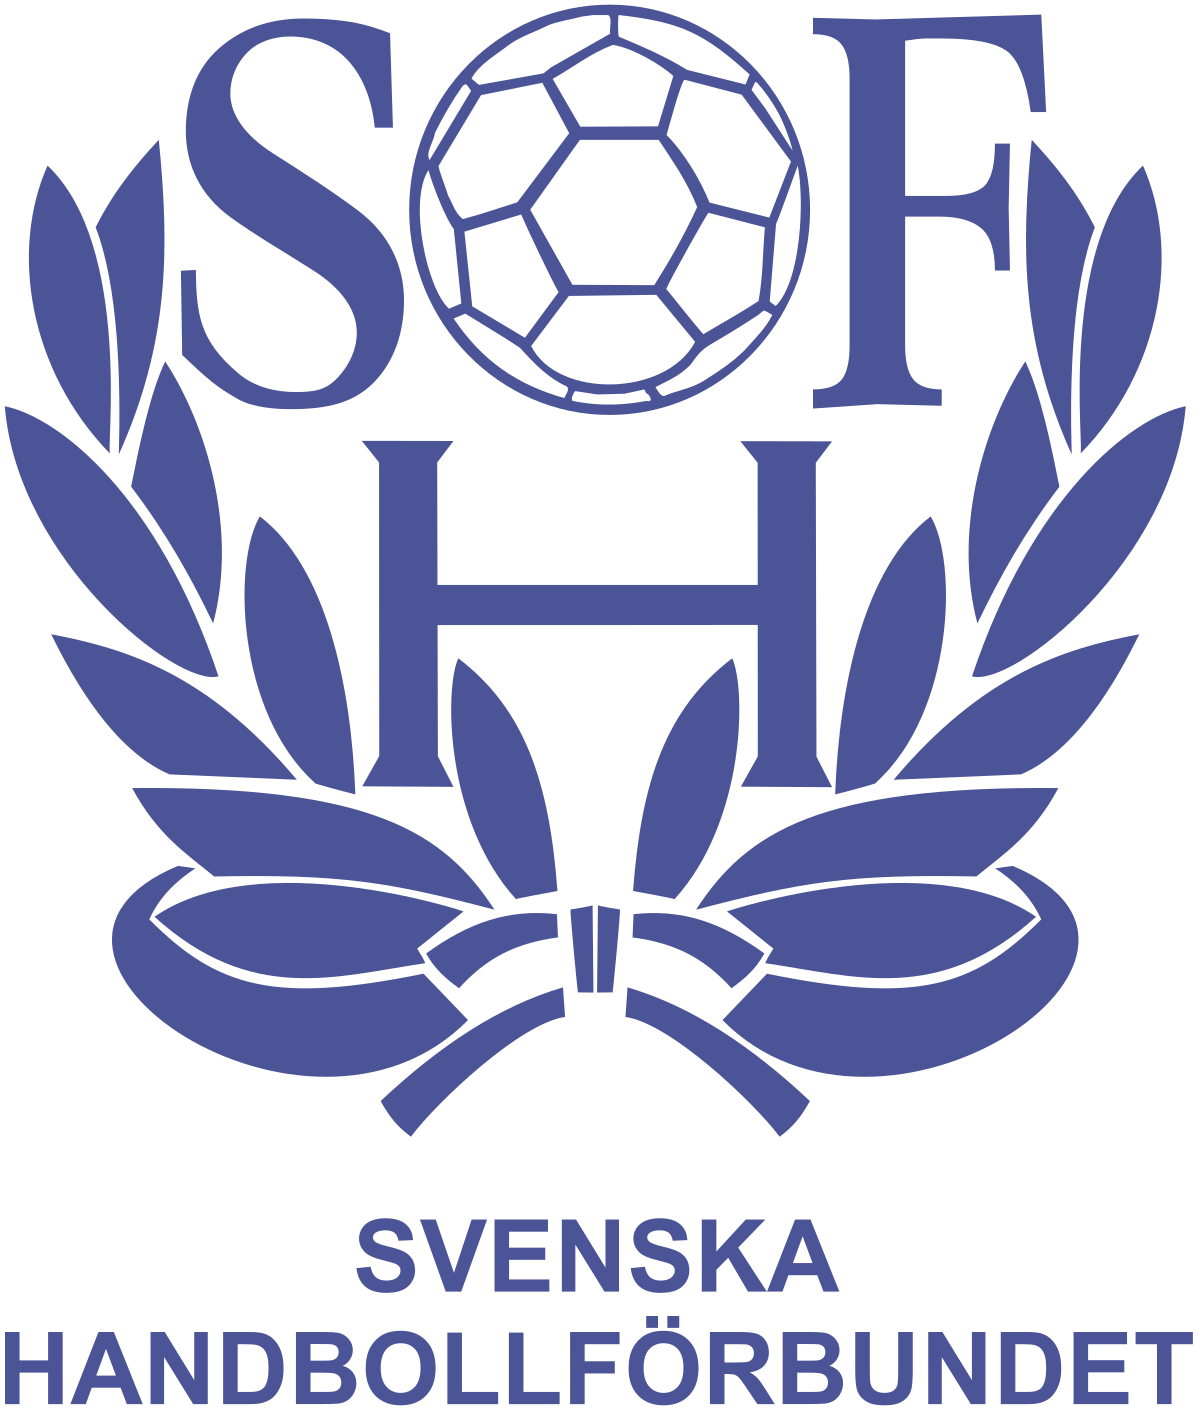 Swedish Logo - Sweden national handball team